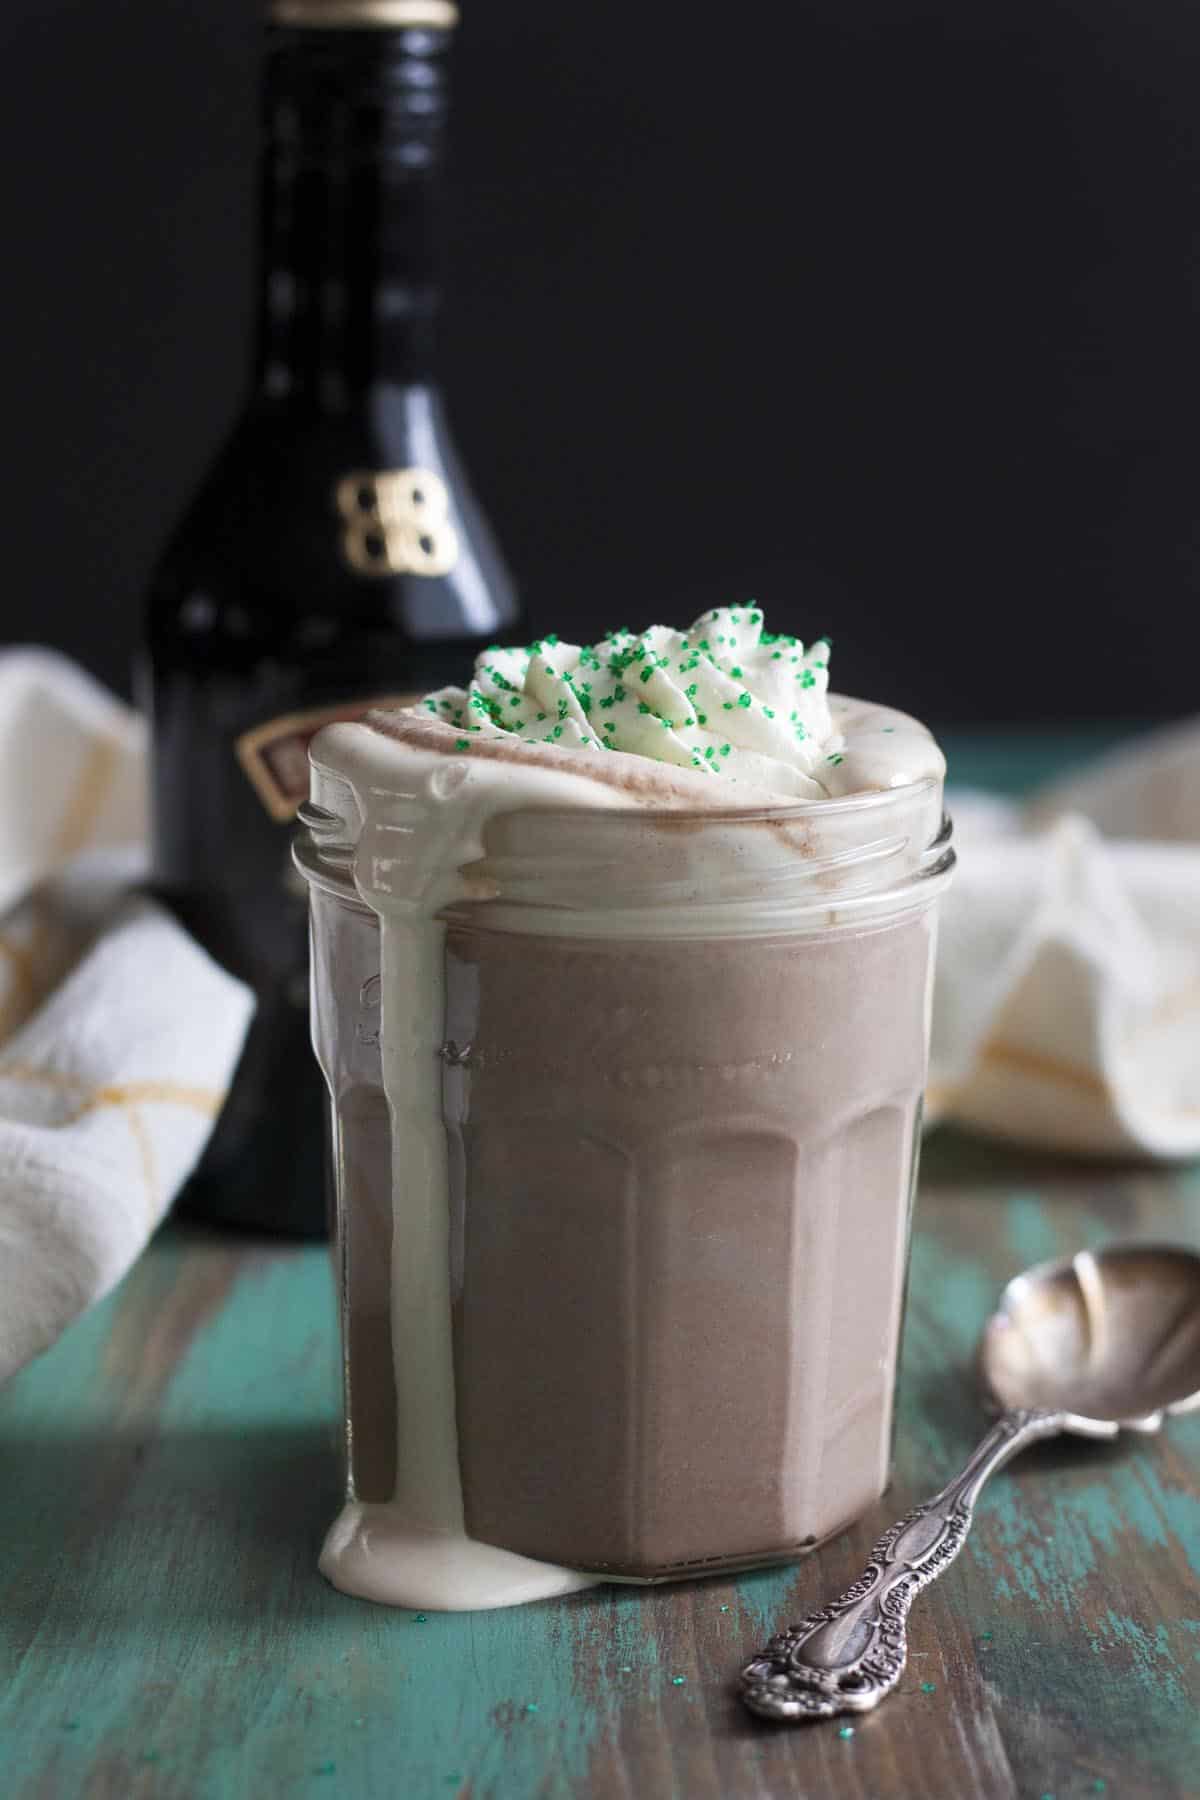 Irish cream hot chocolate with whipped cream in a glass jar